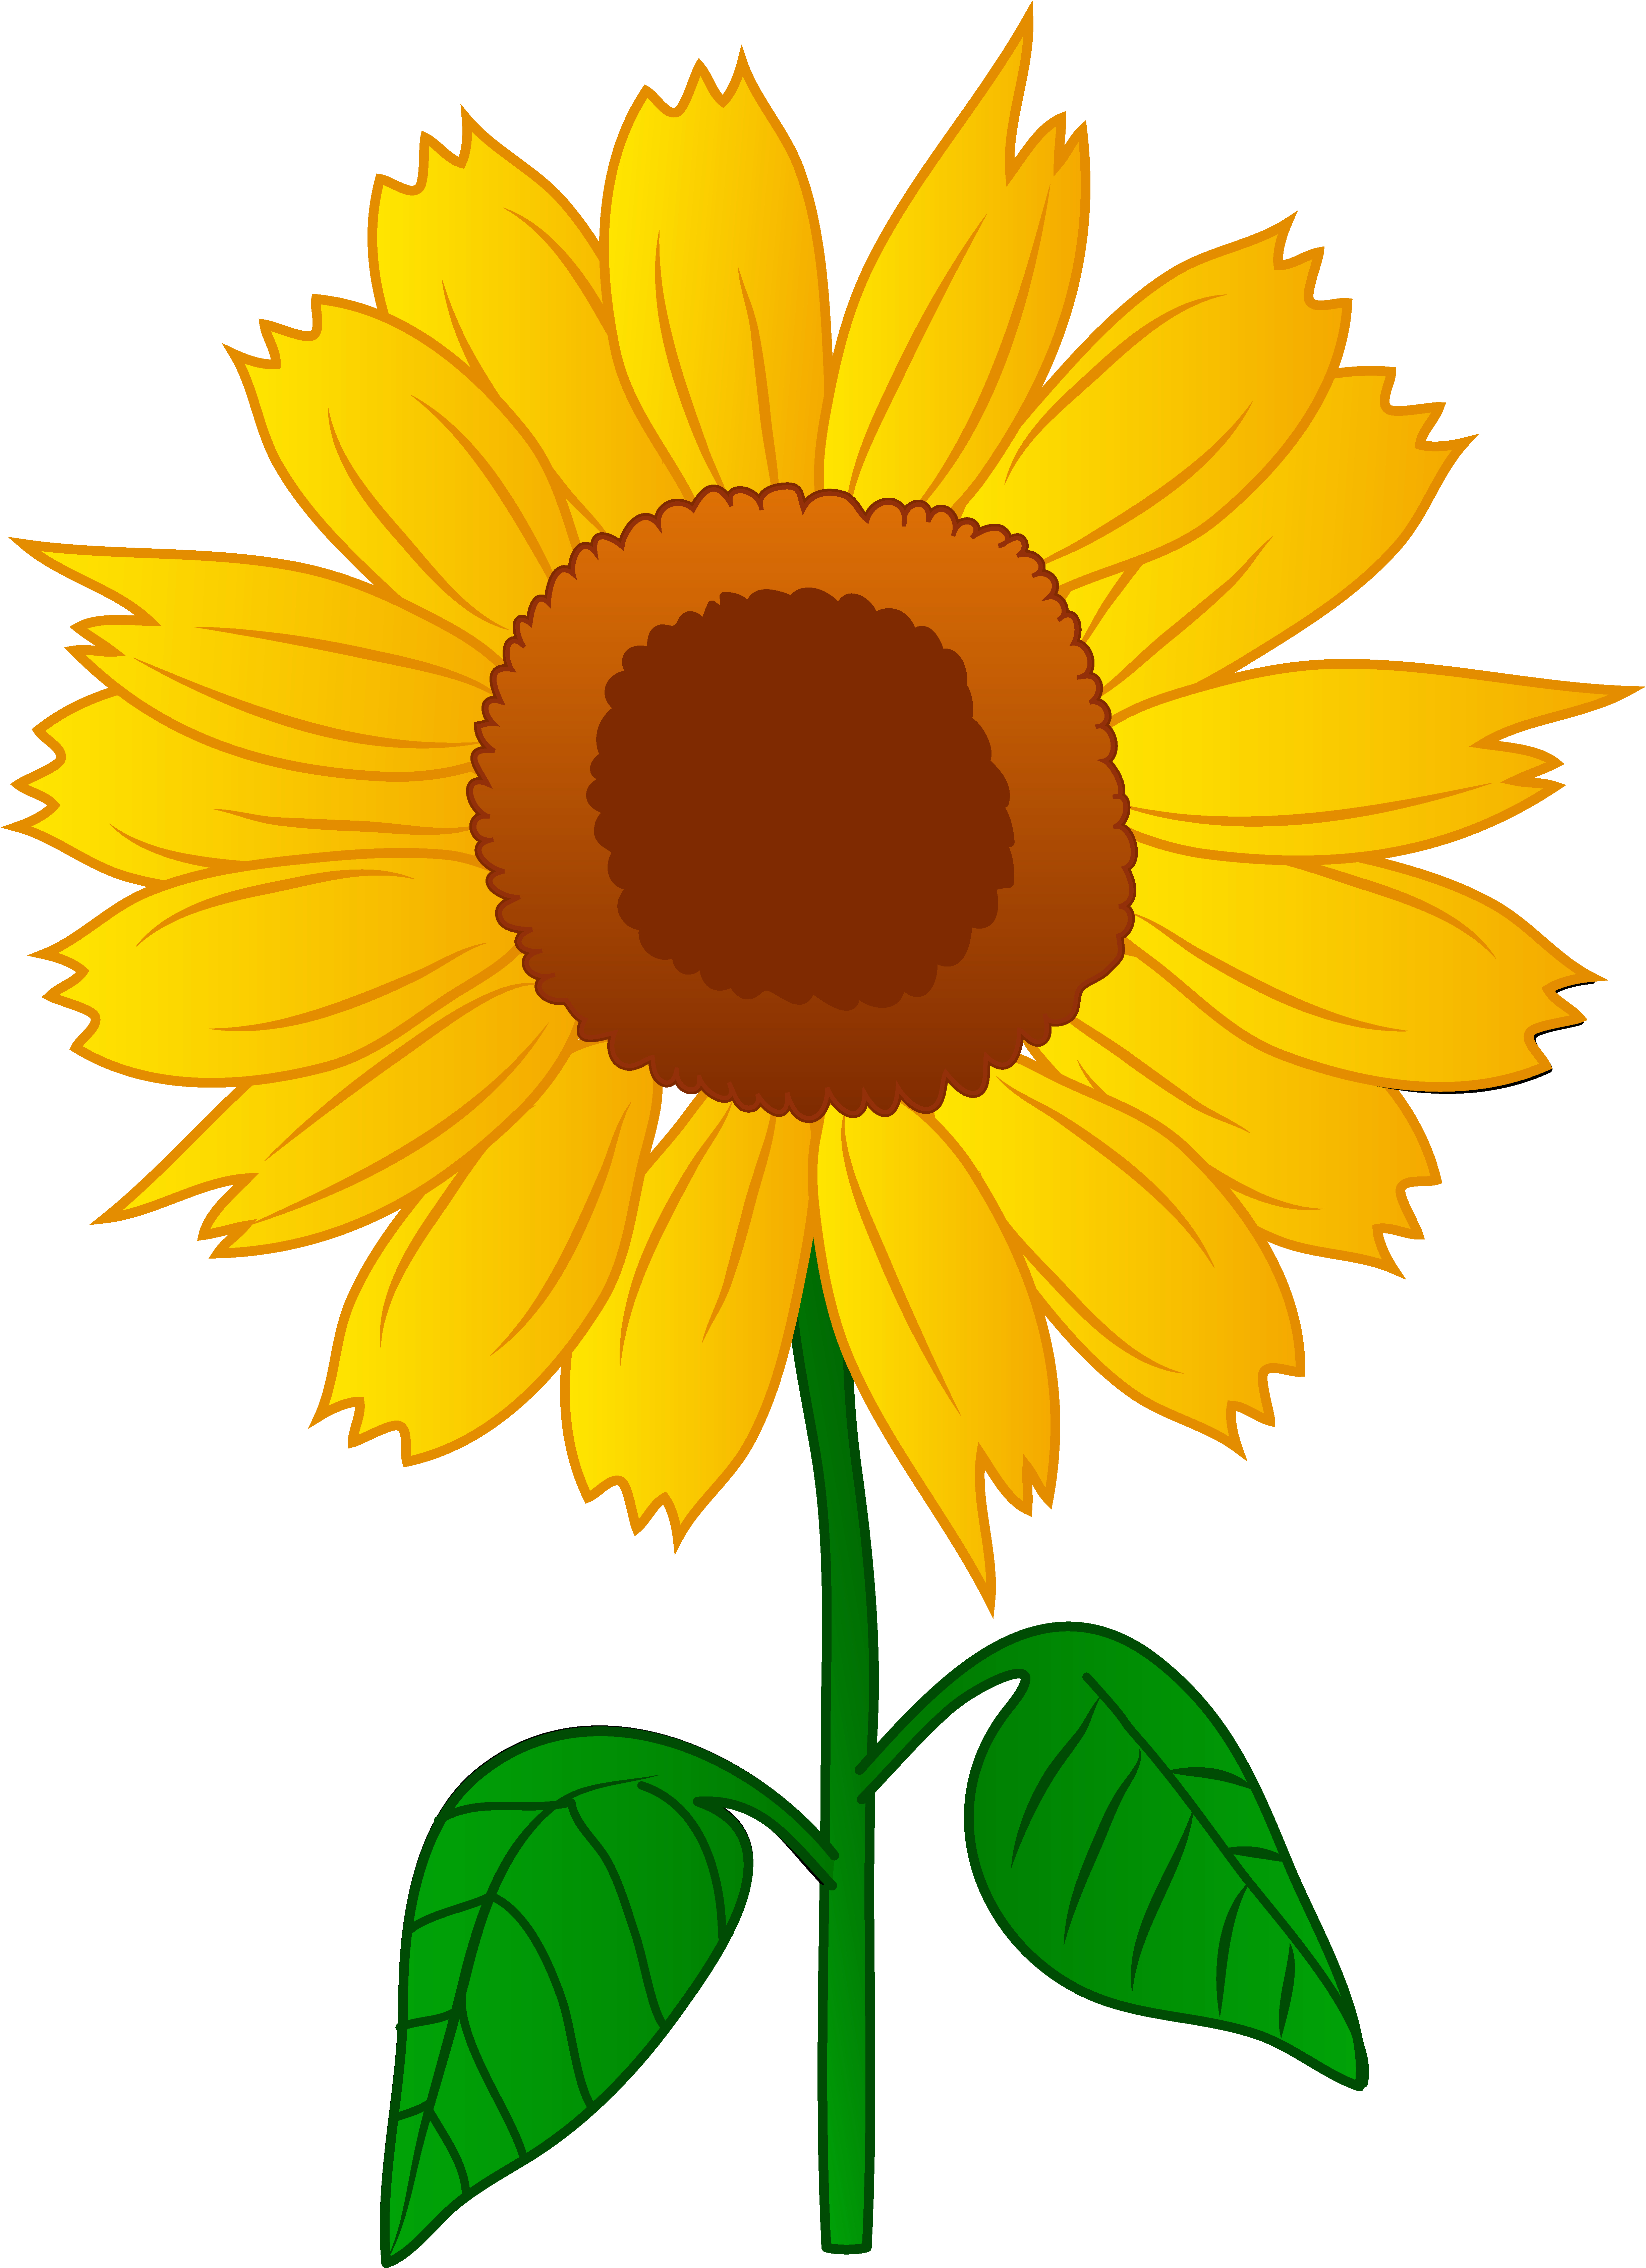 sunflower: Sunflower isolated